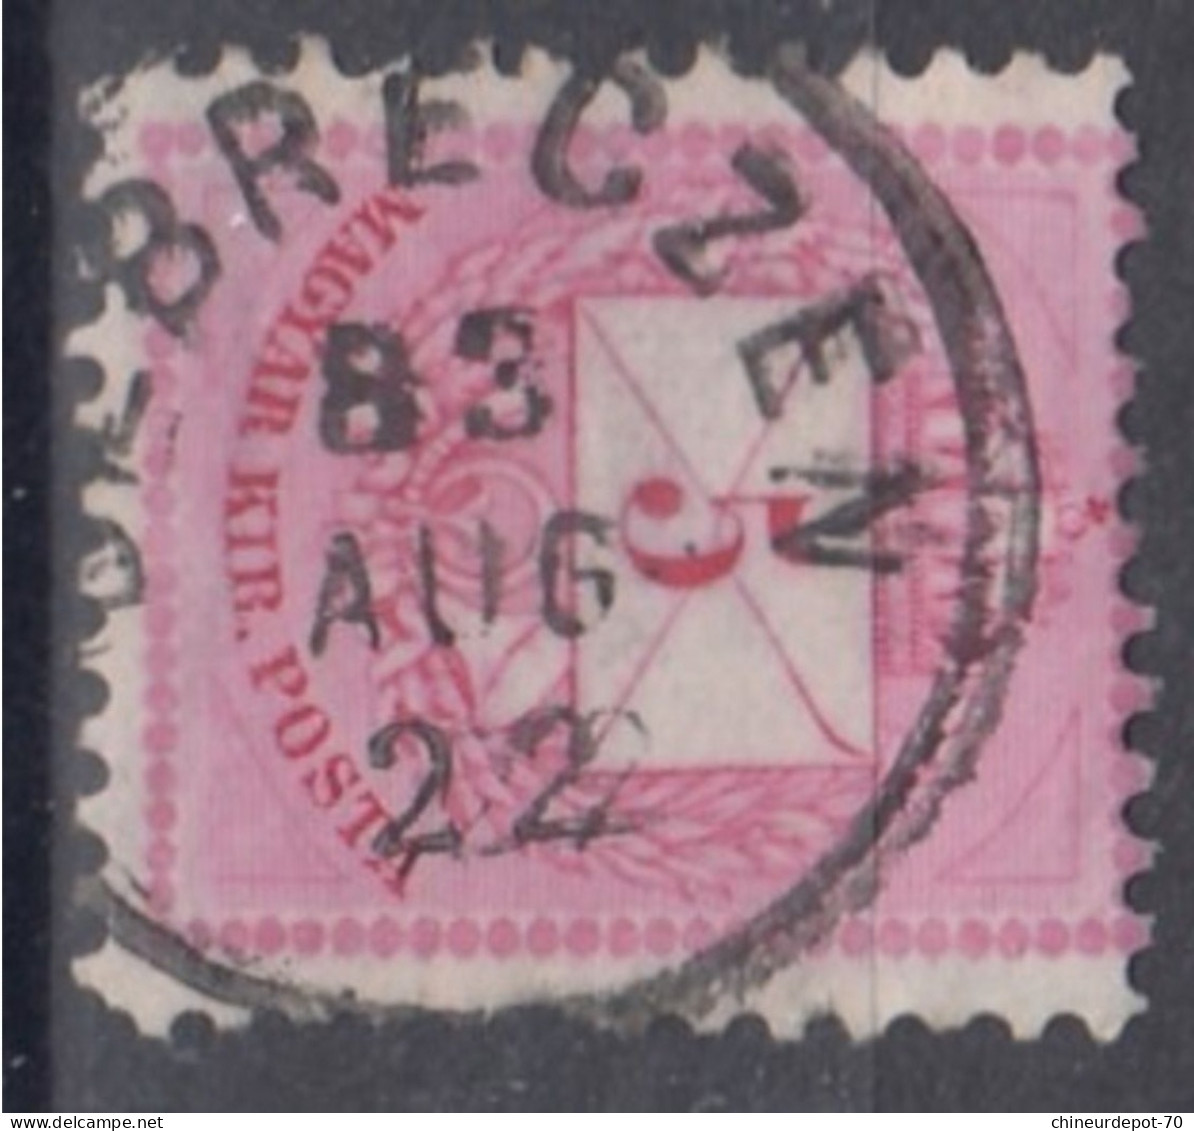 Hongrie Magyar Posta - Used Stamps